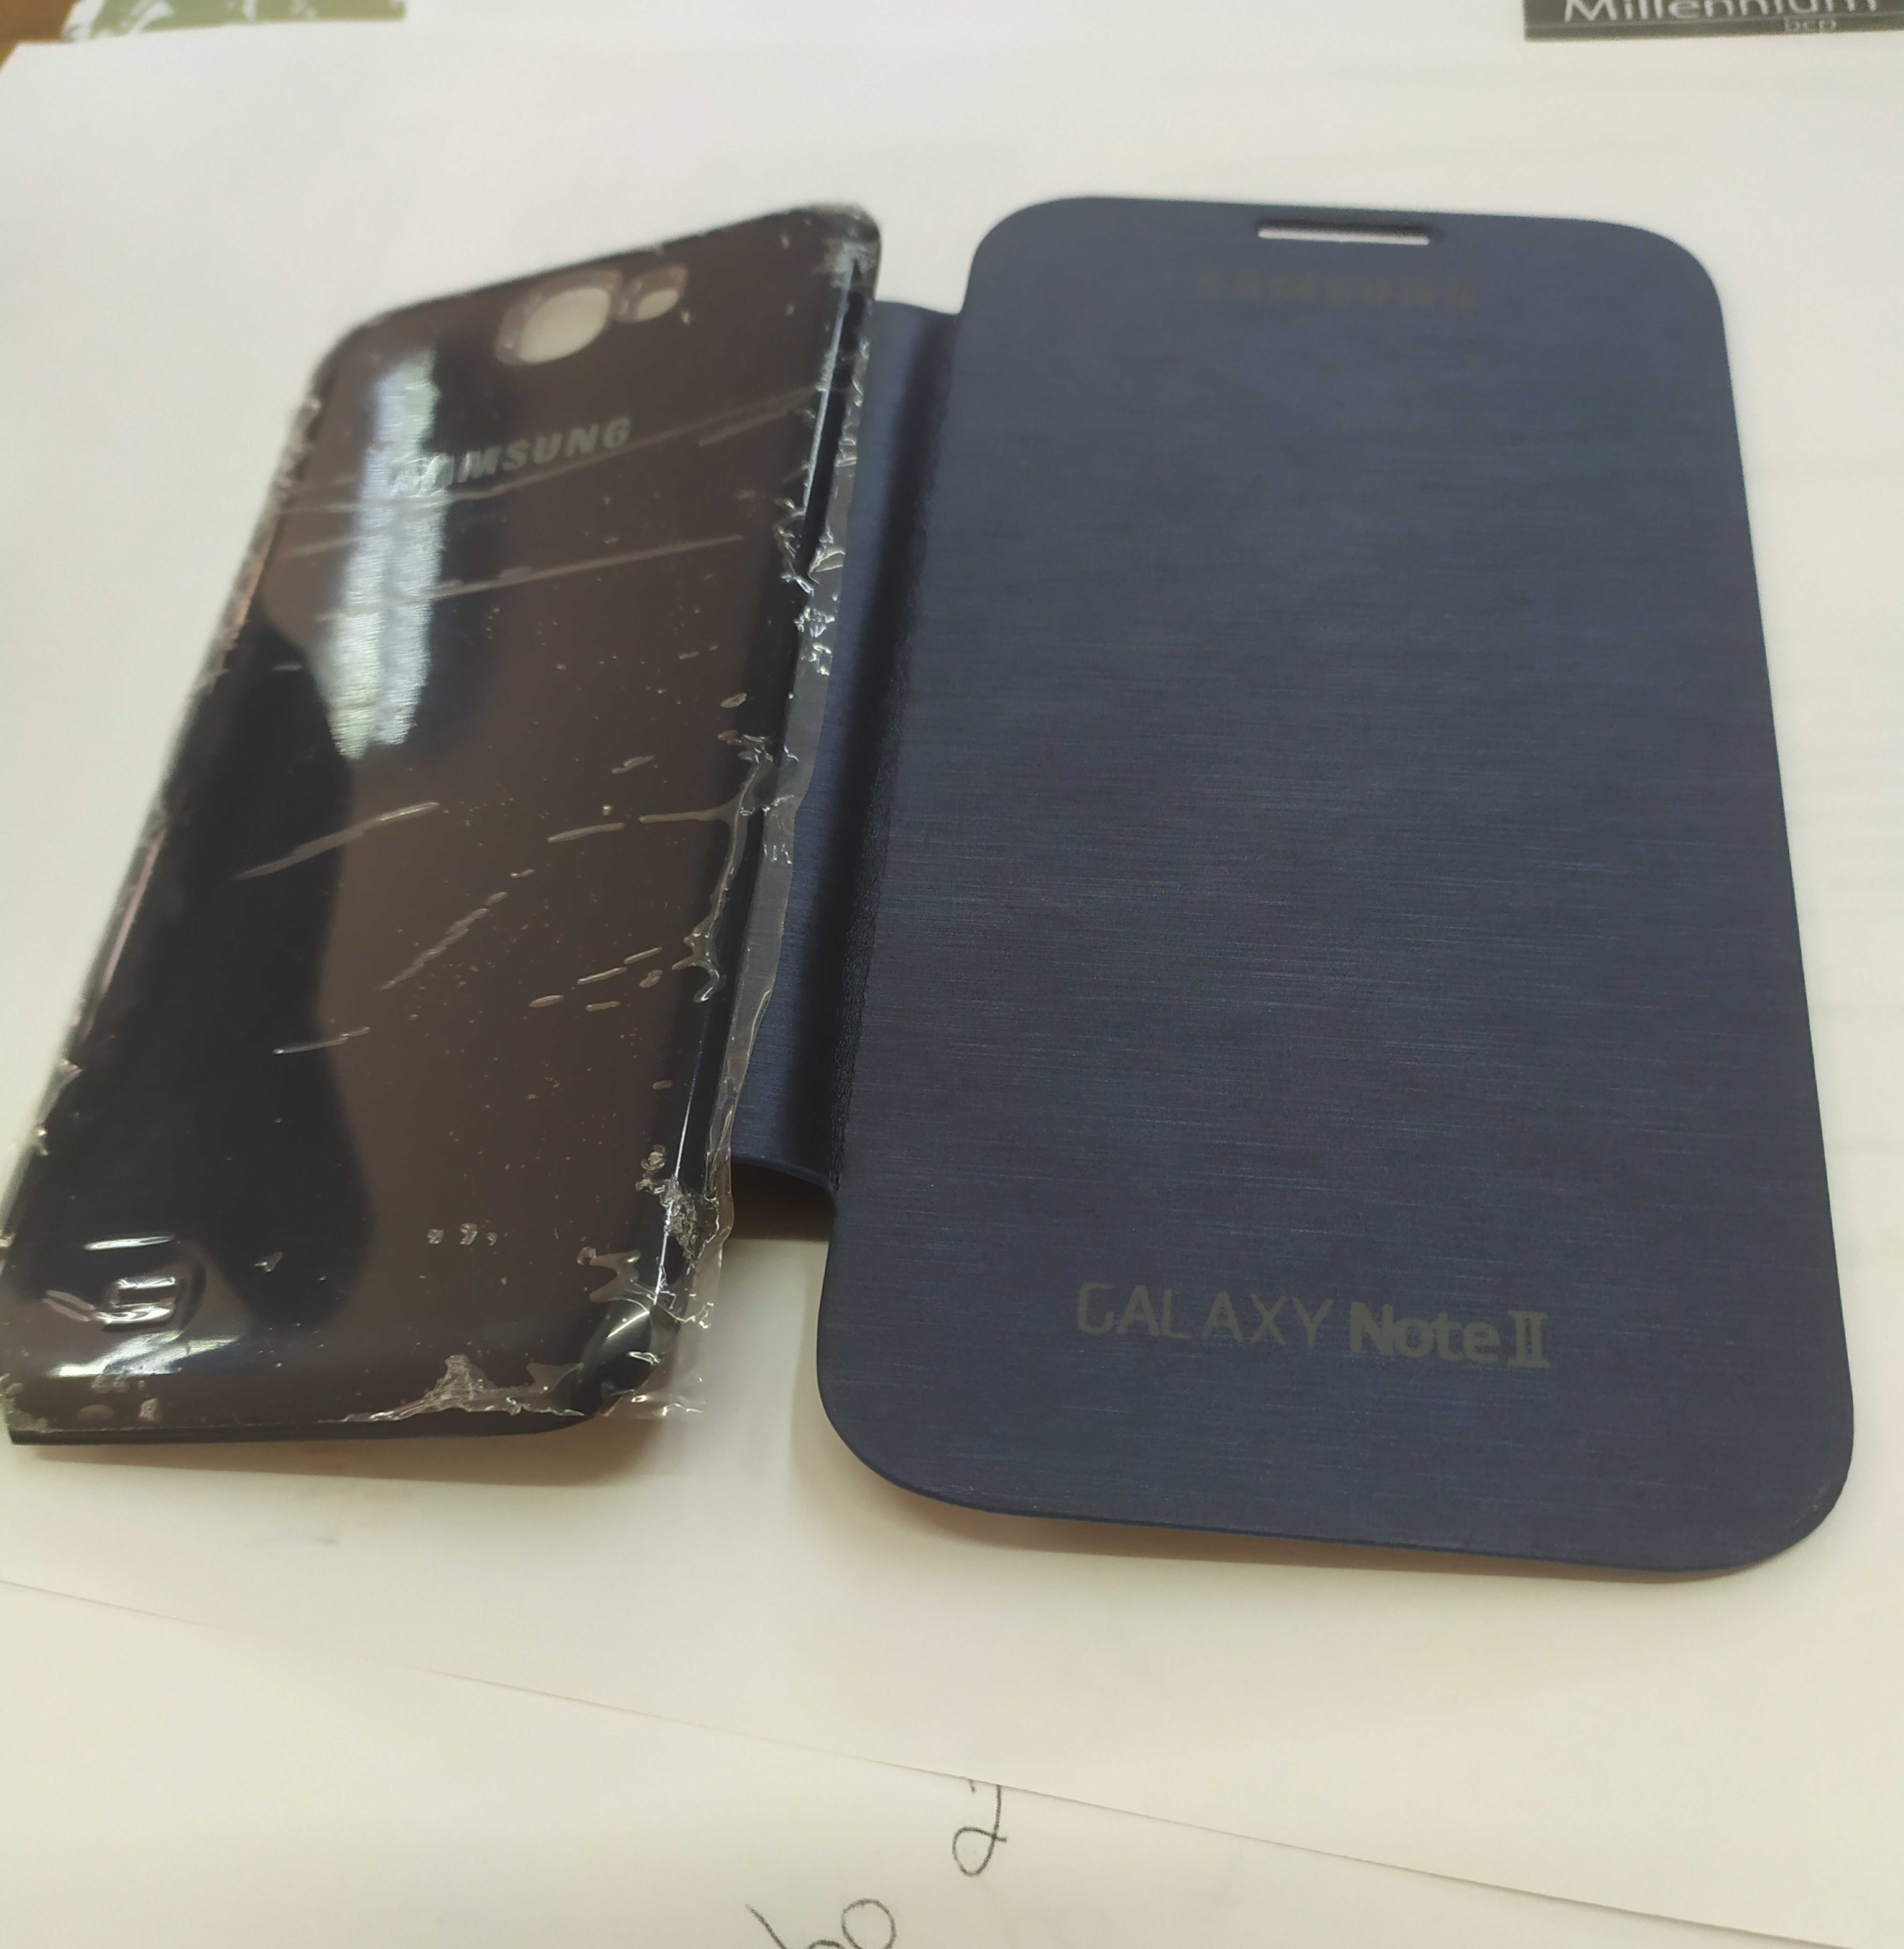 Capa telemóvel Samsung Galaxy note II IPHONE 4